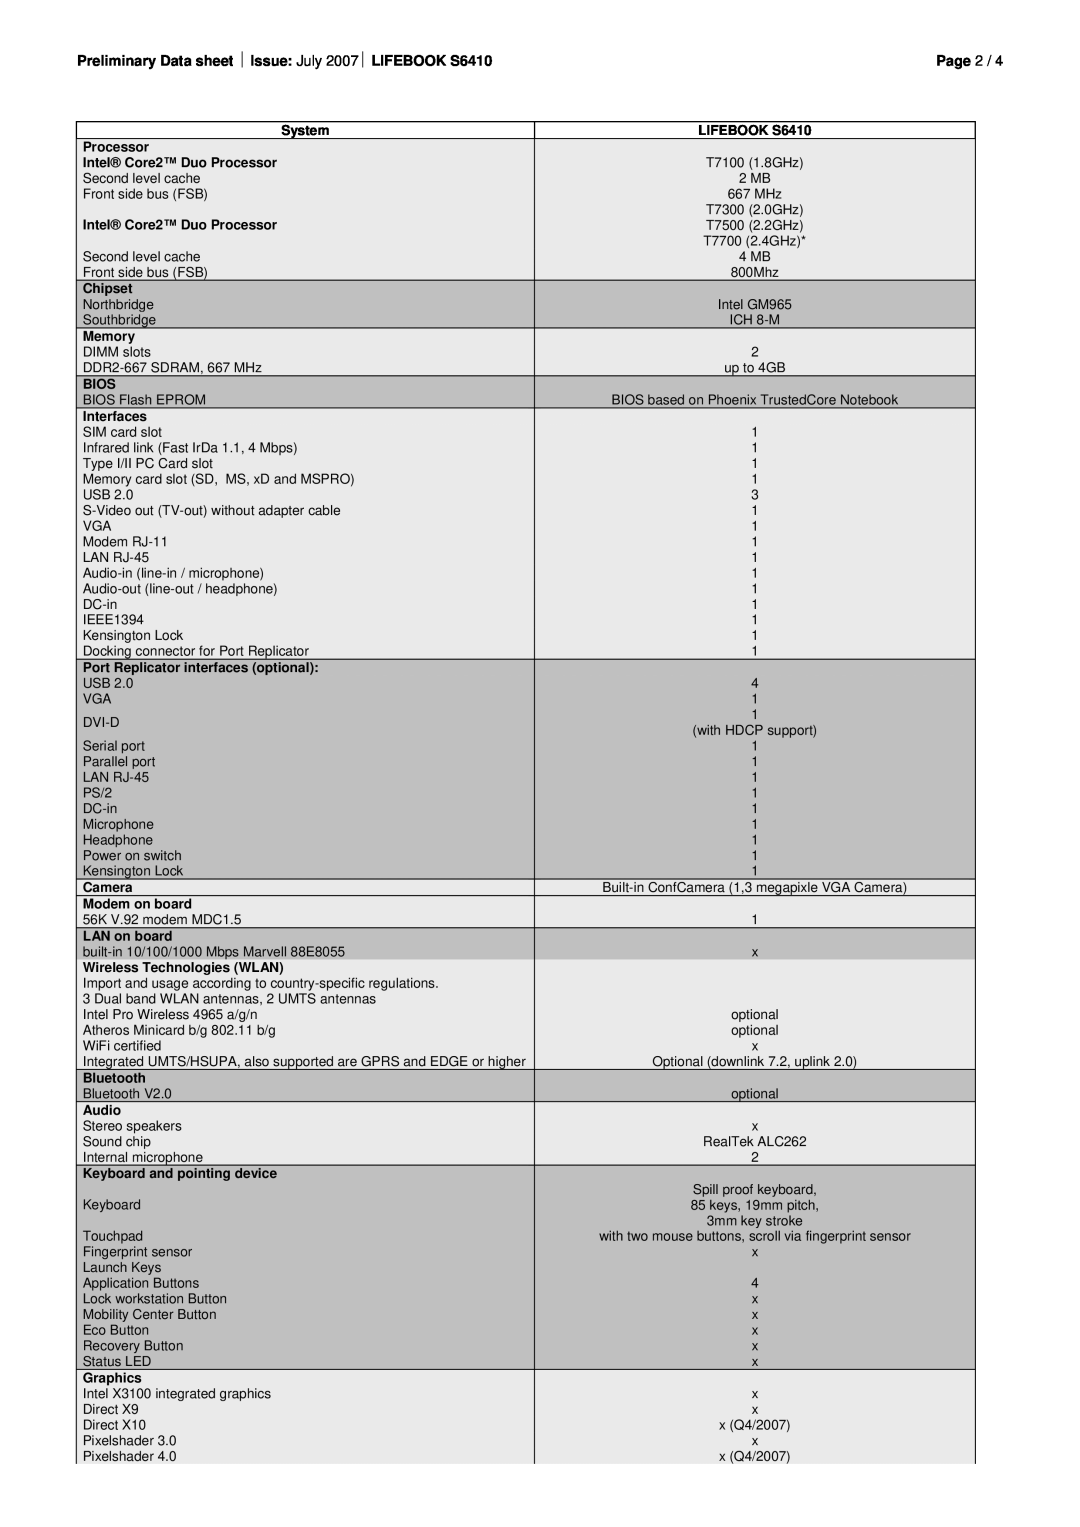 Fujitsu Siemens Computers manual Preliminary Data sheet Issue July 2007 LIFEBOOK S6410 